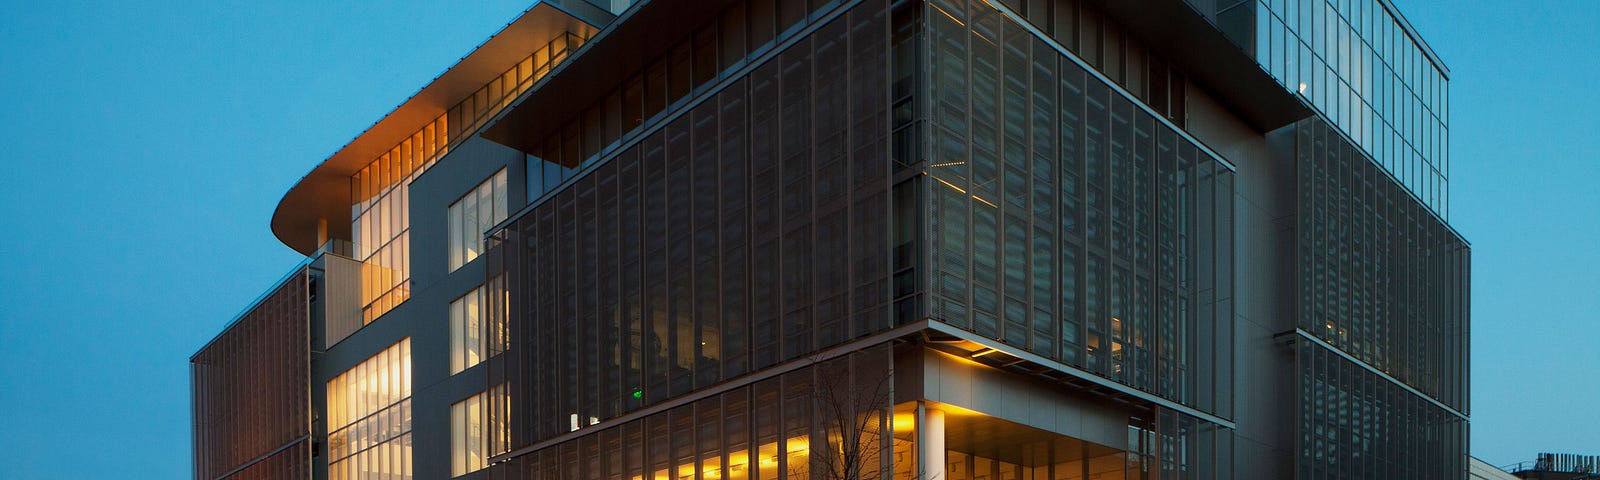 The MIT Media Lab building in Cambridge, Massachusetts, seen at twilight.